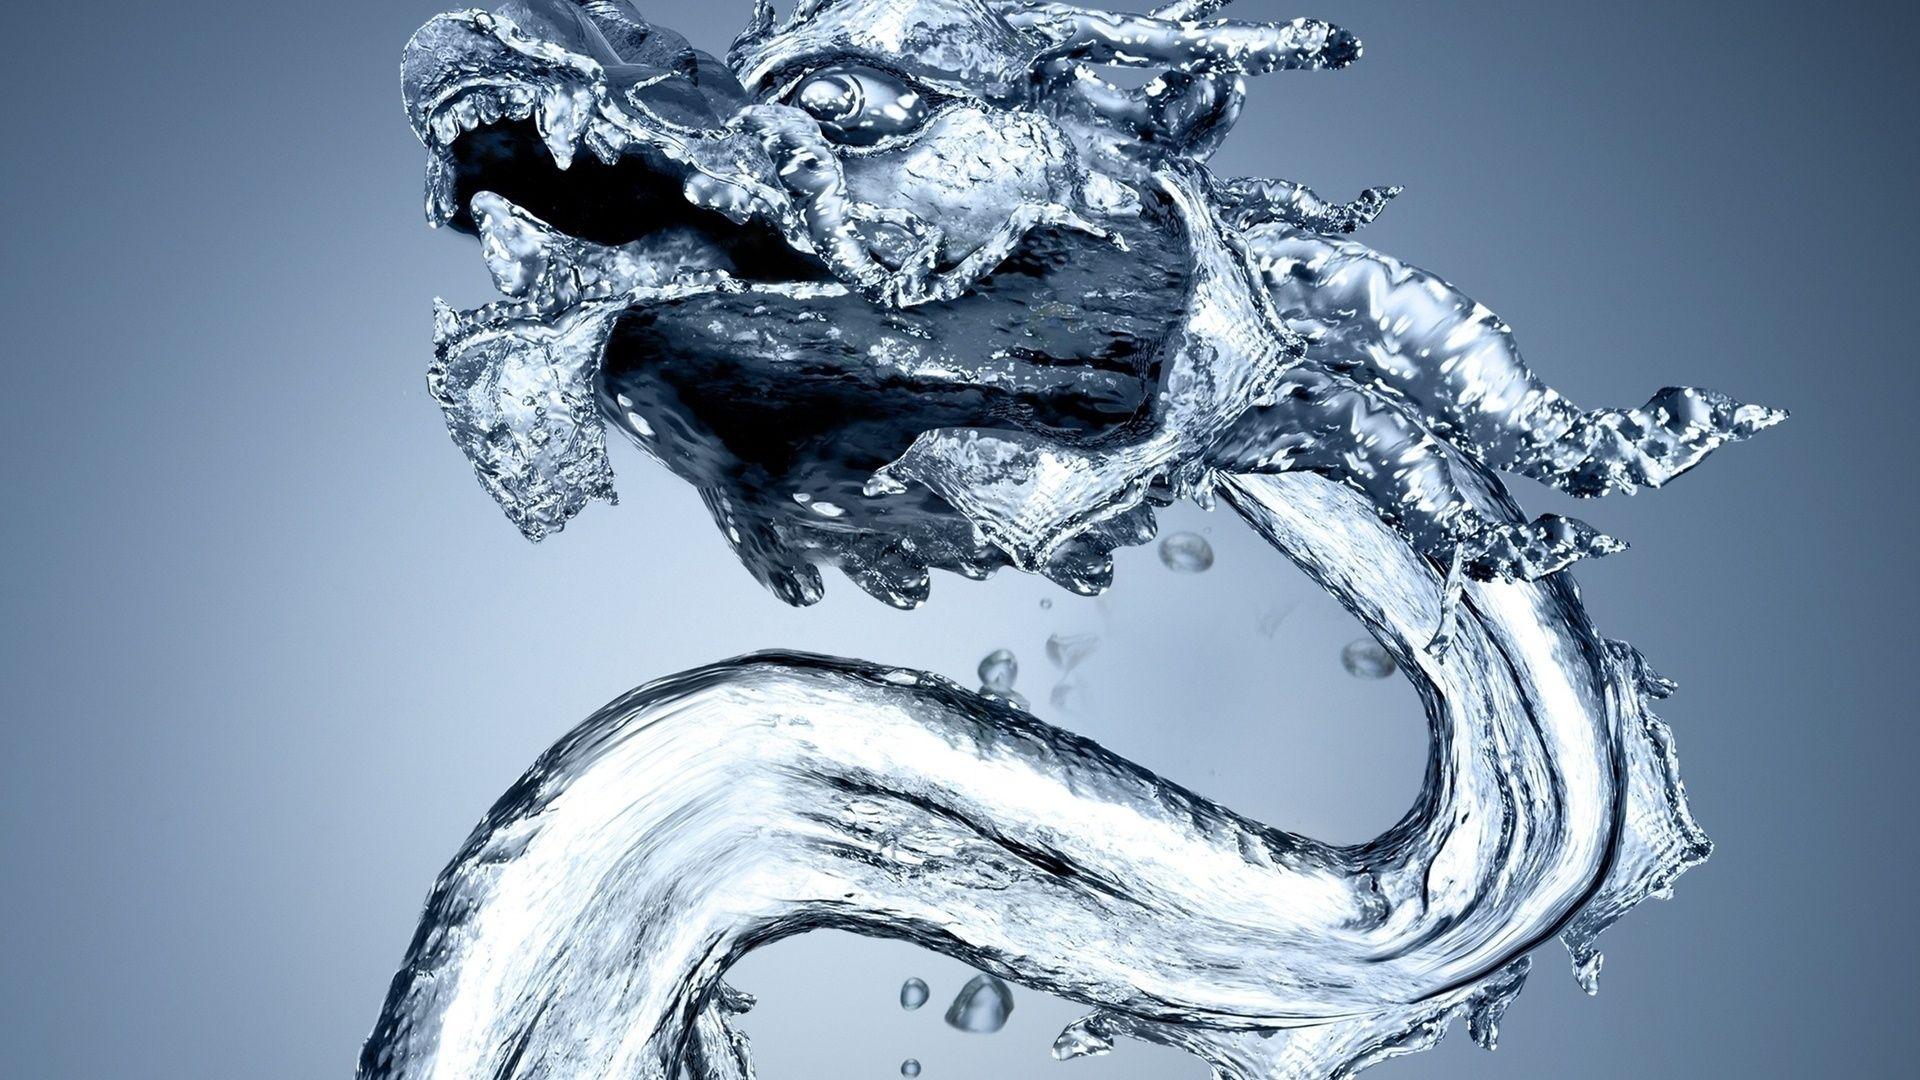 Water Dragon Wallpaper. Wallpaper Studio 10. Tens of thousands HD